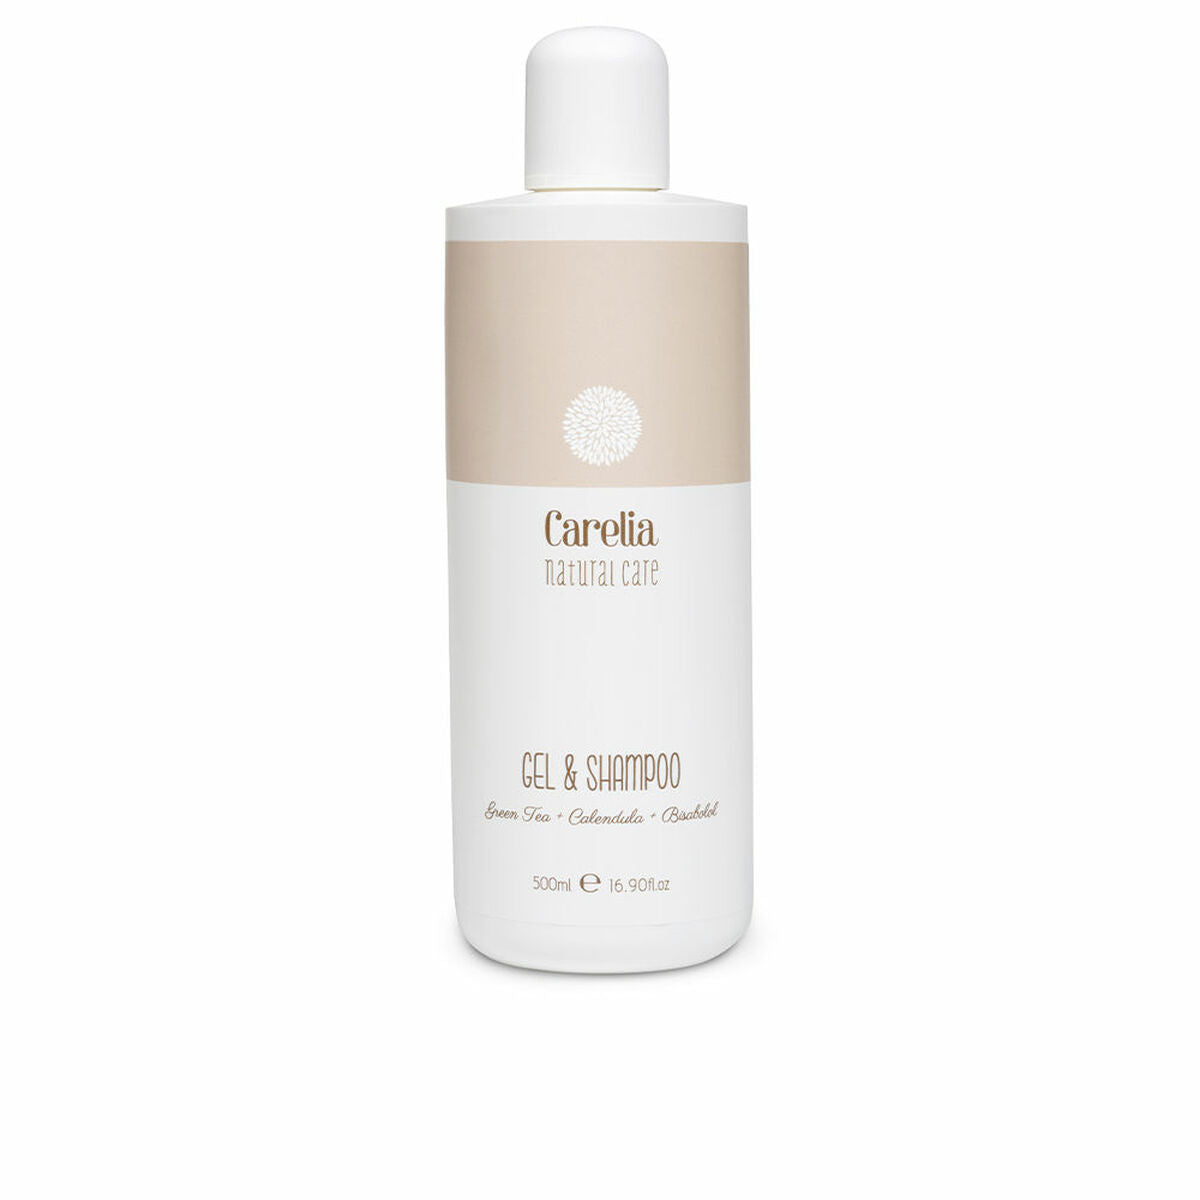 2-in-1 geeli ja shampoo Carelia Natural Care 500 ml